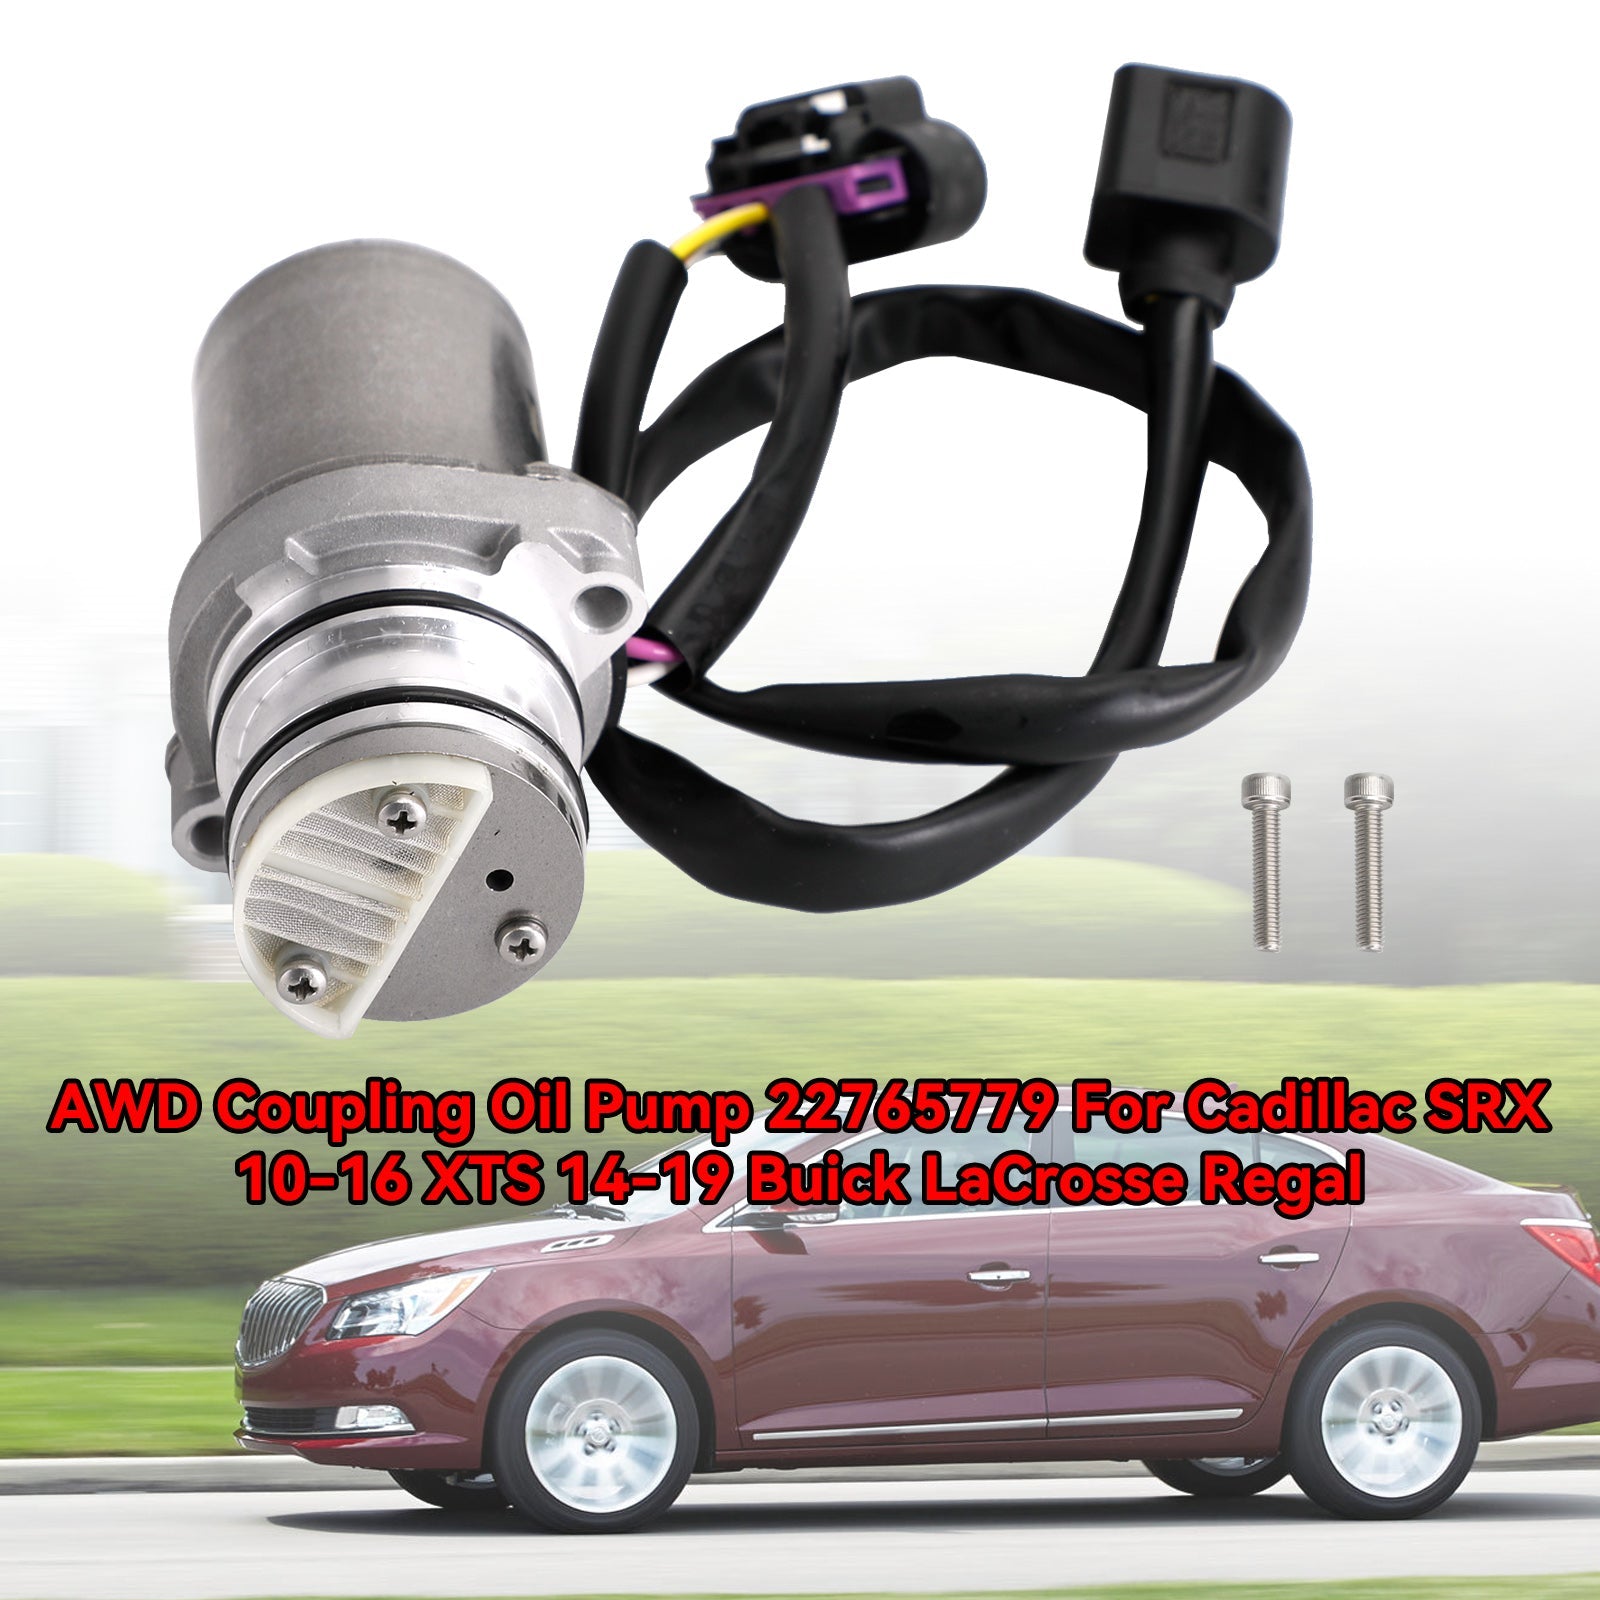 2011-2016 AWD Buick LaCrosse V6 3.6L Acoplamiento de bomba de aceite 22765779 404029 13285796 699000